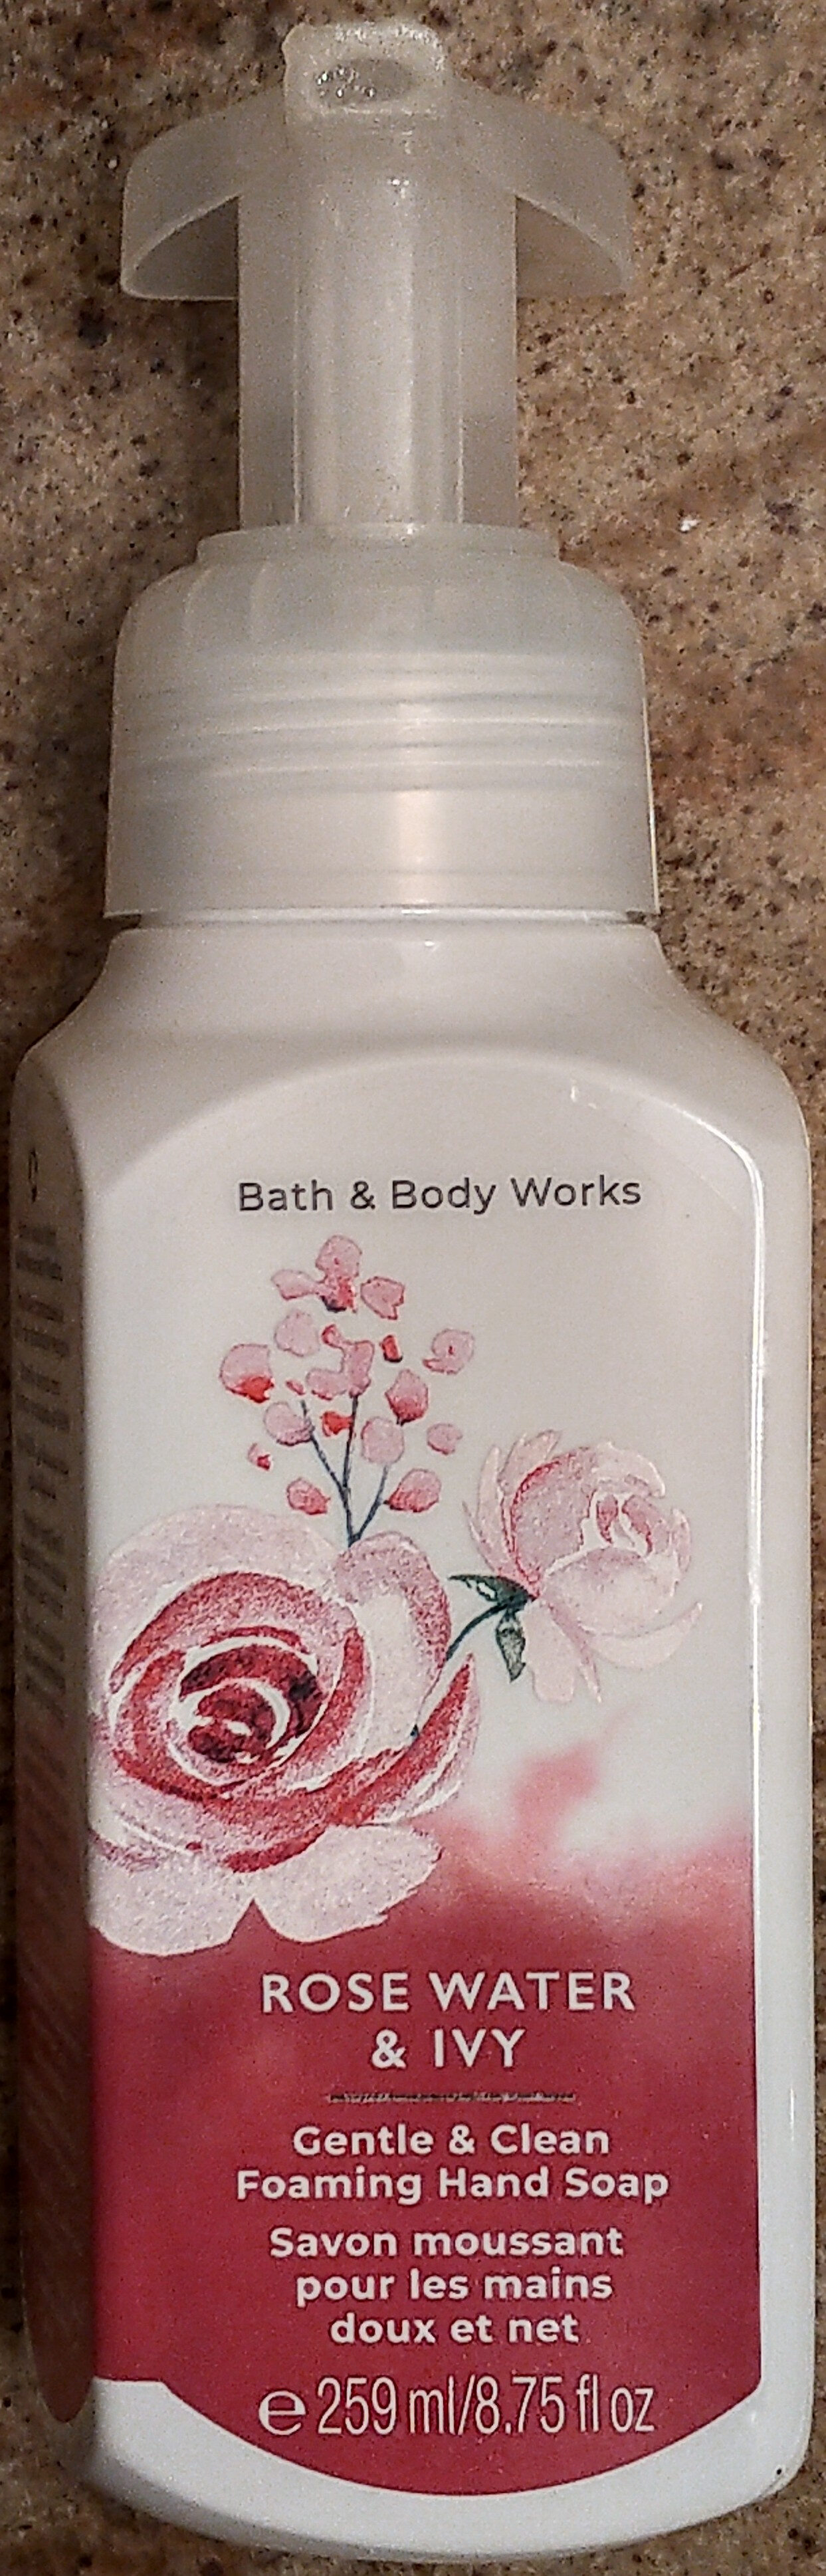 Rose Water & Ivy Gentle & Clean Foaming Hand Soap - Produto - en